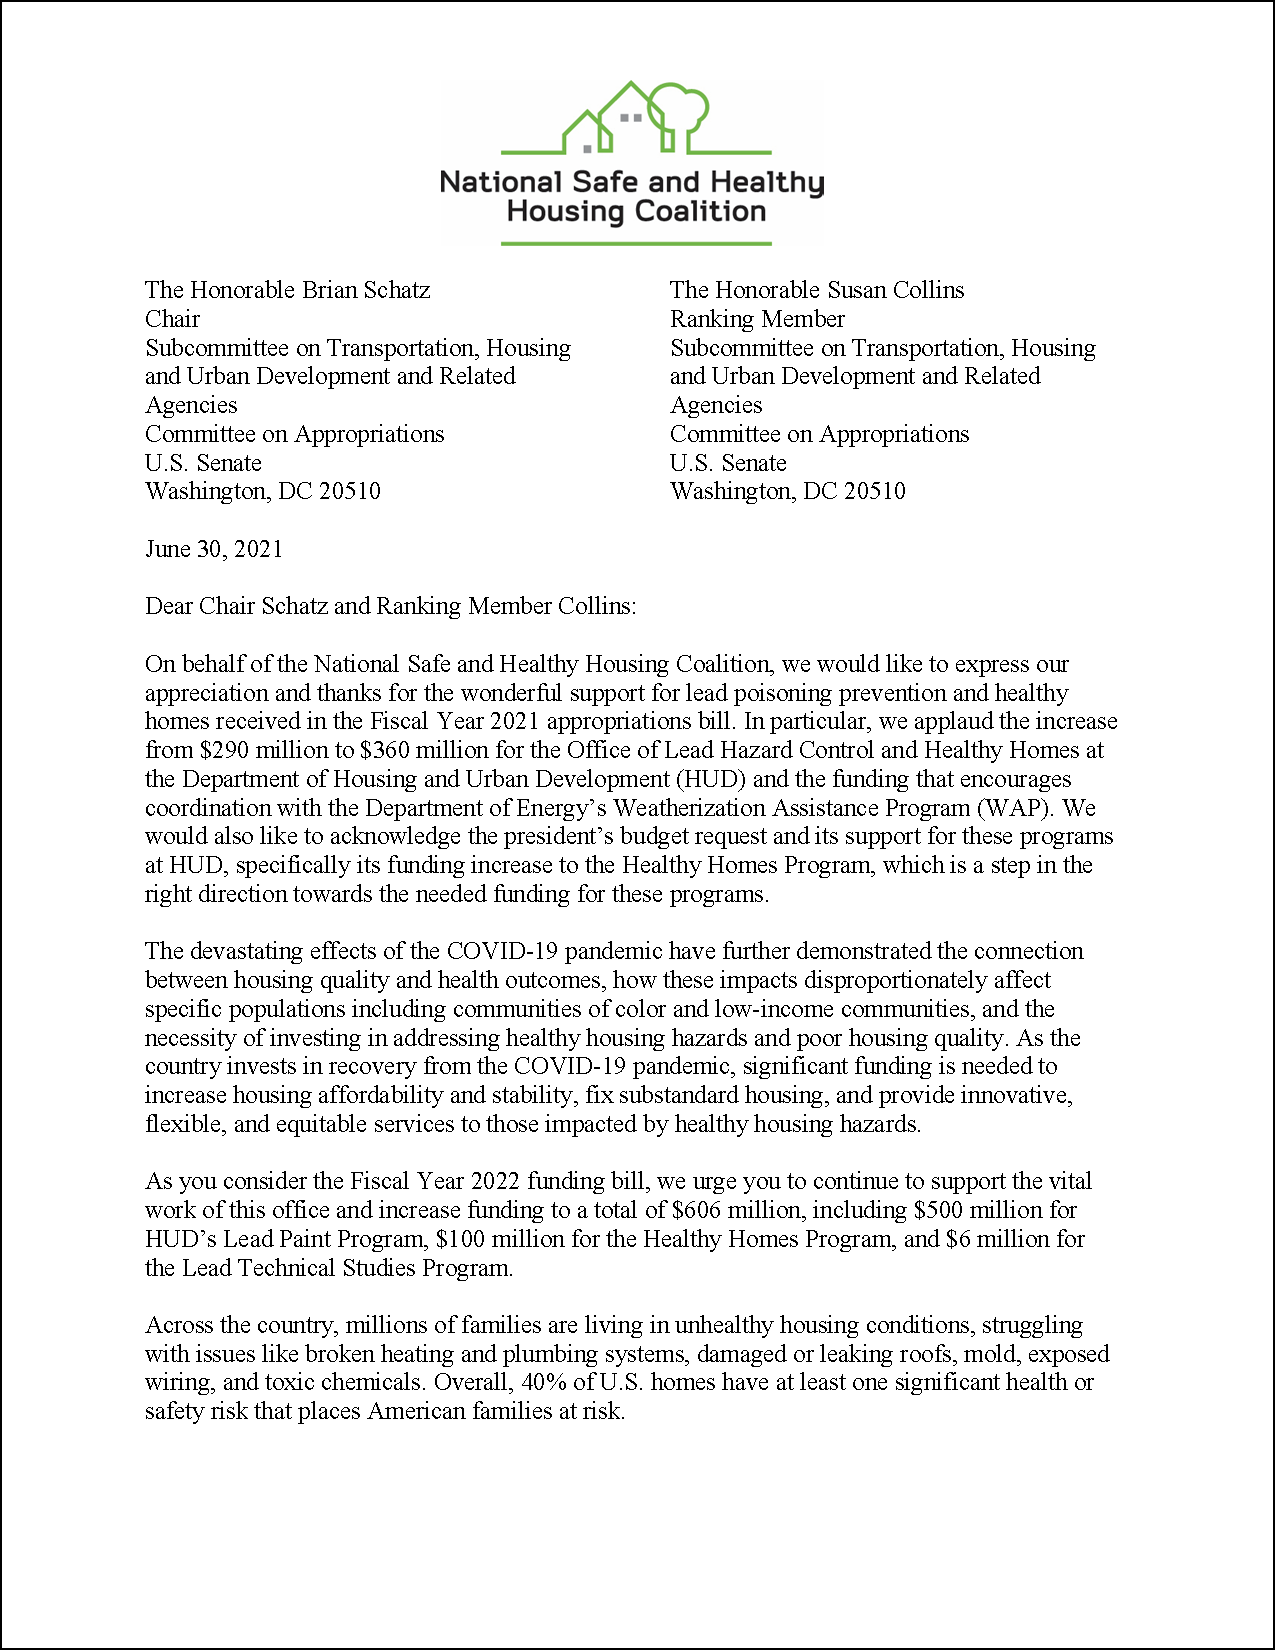 Letter: FY22 Appropriations to U.S. Senate: HUD Programs [2021.06.30] [NSHHC]